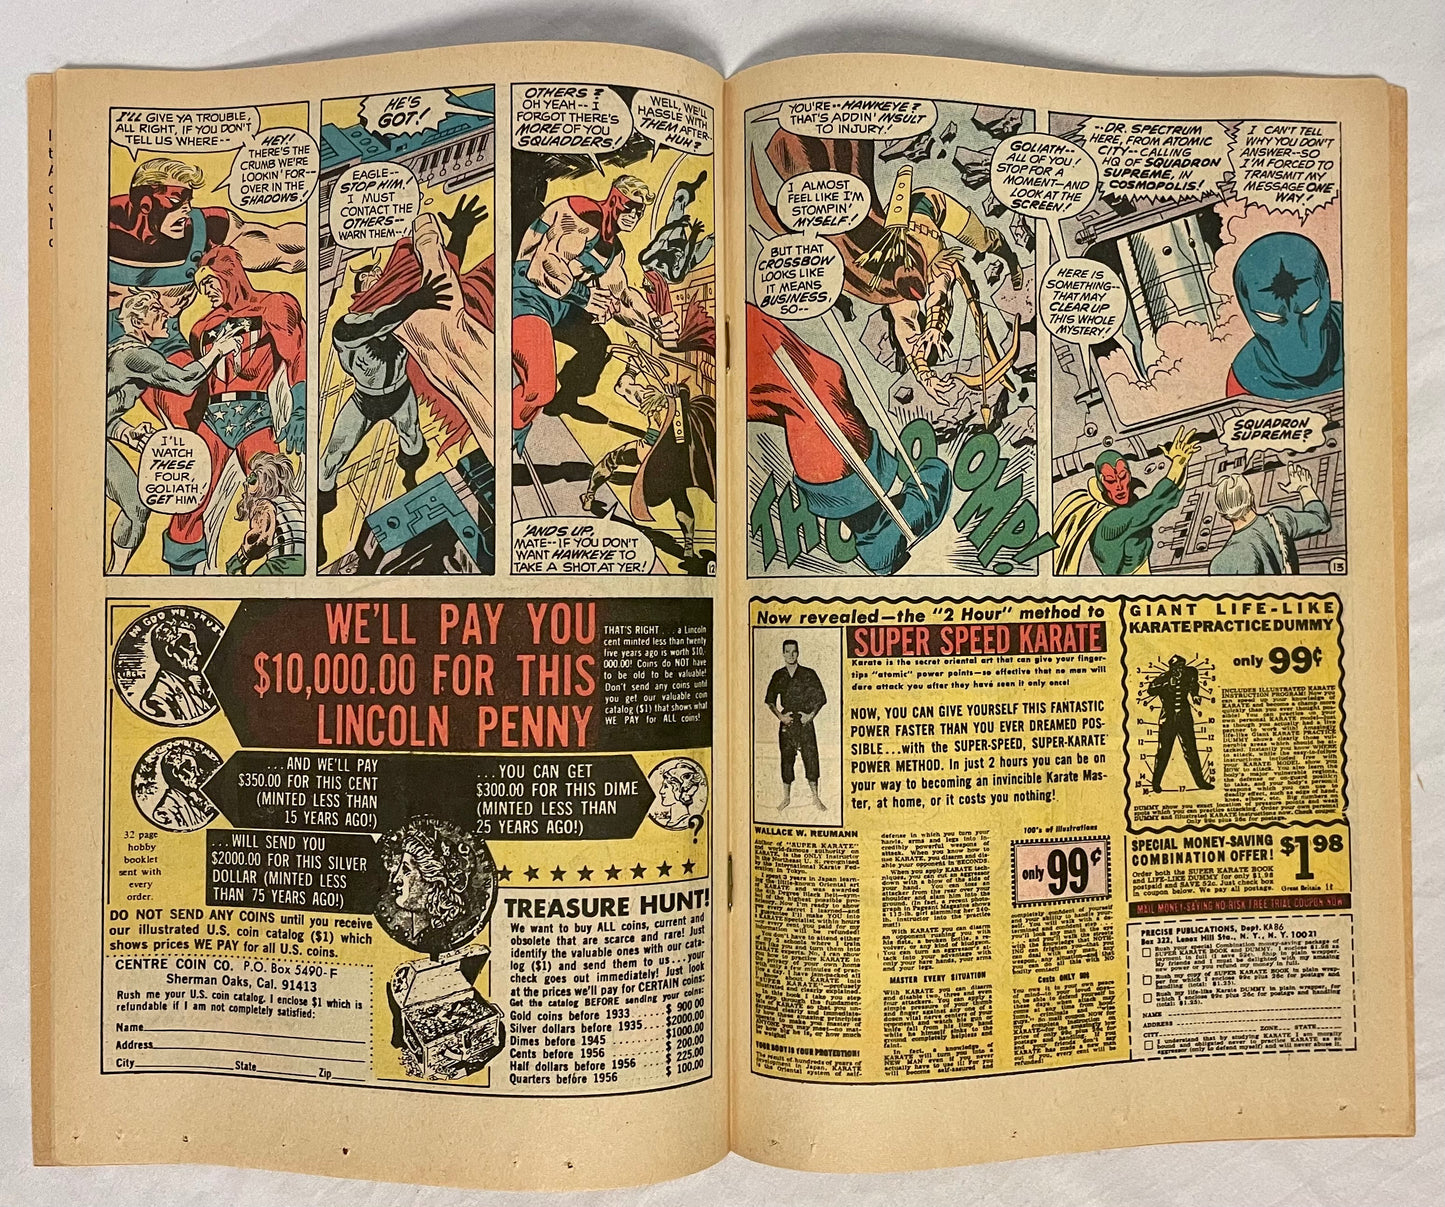 Marvel Comics The Avengers #85